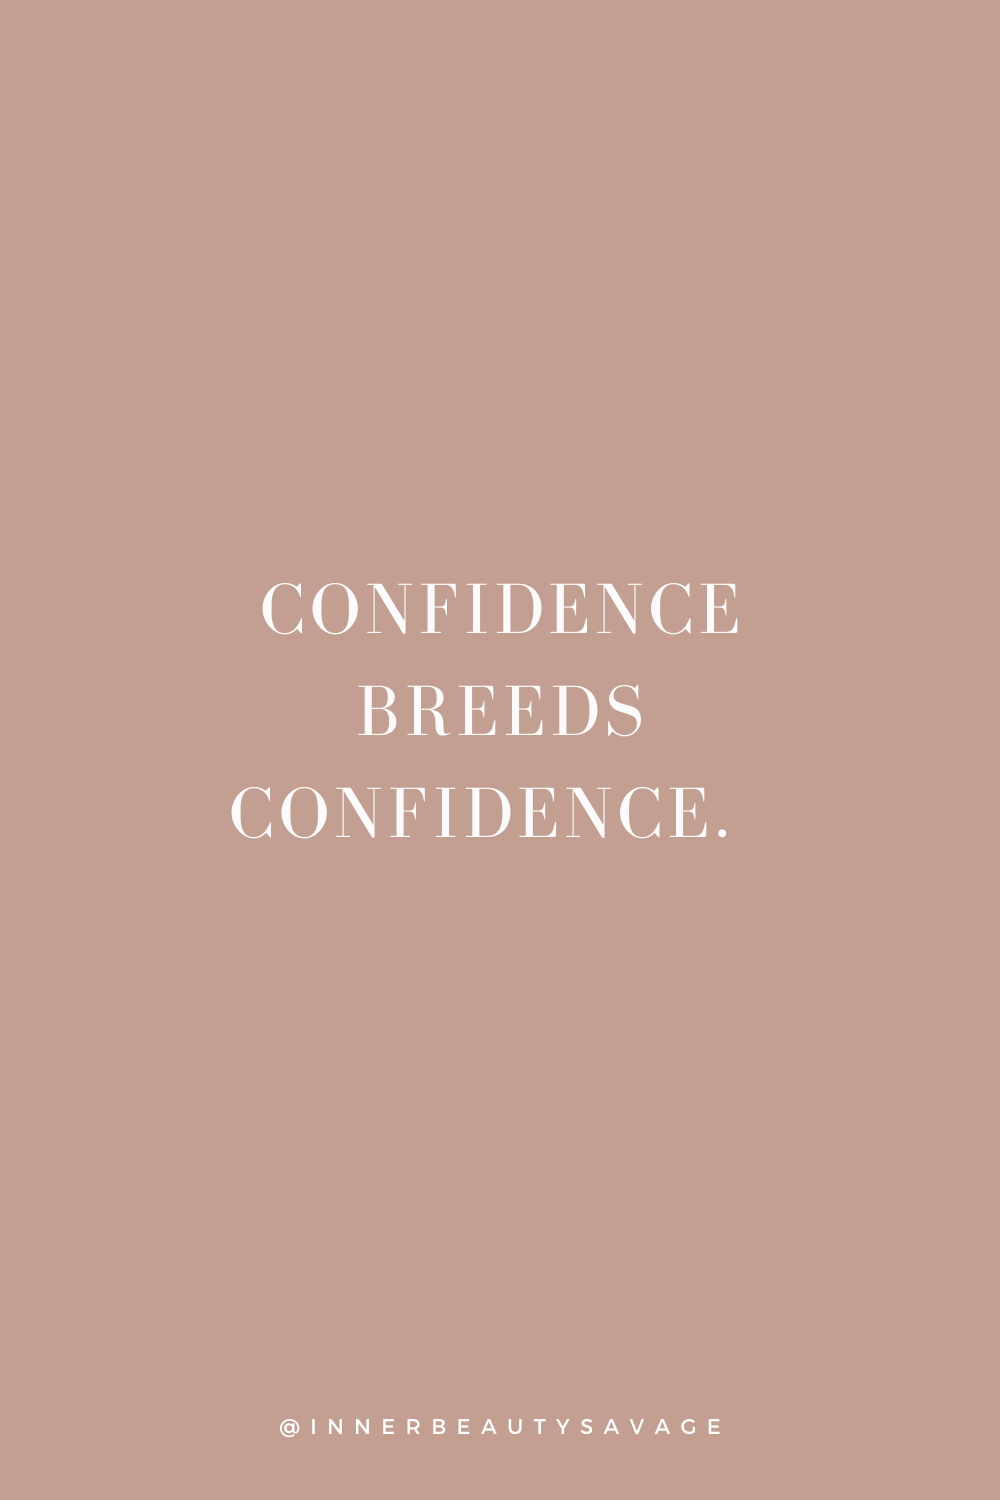 self-confidence quote